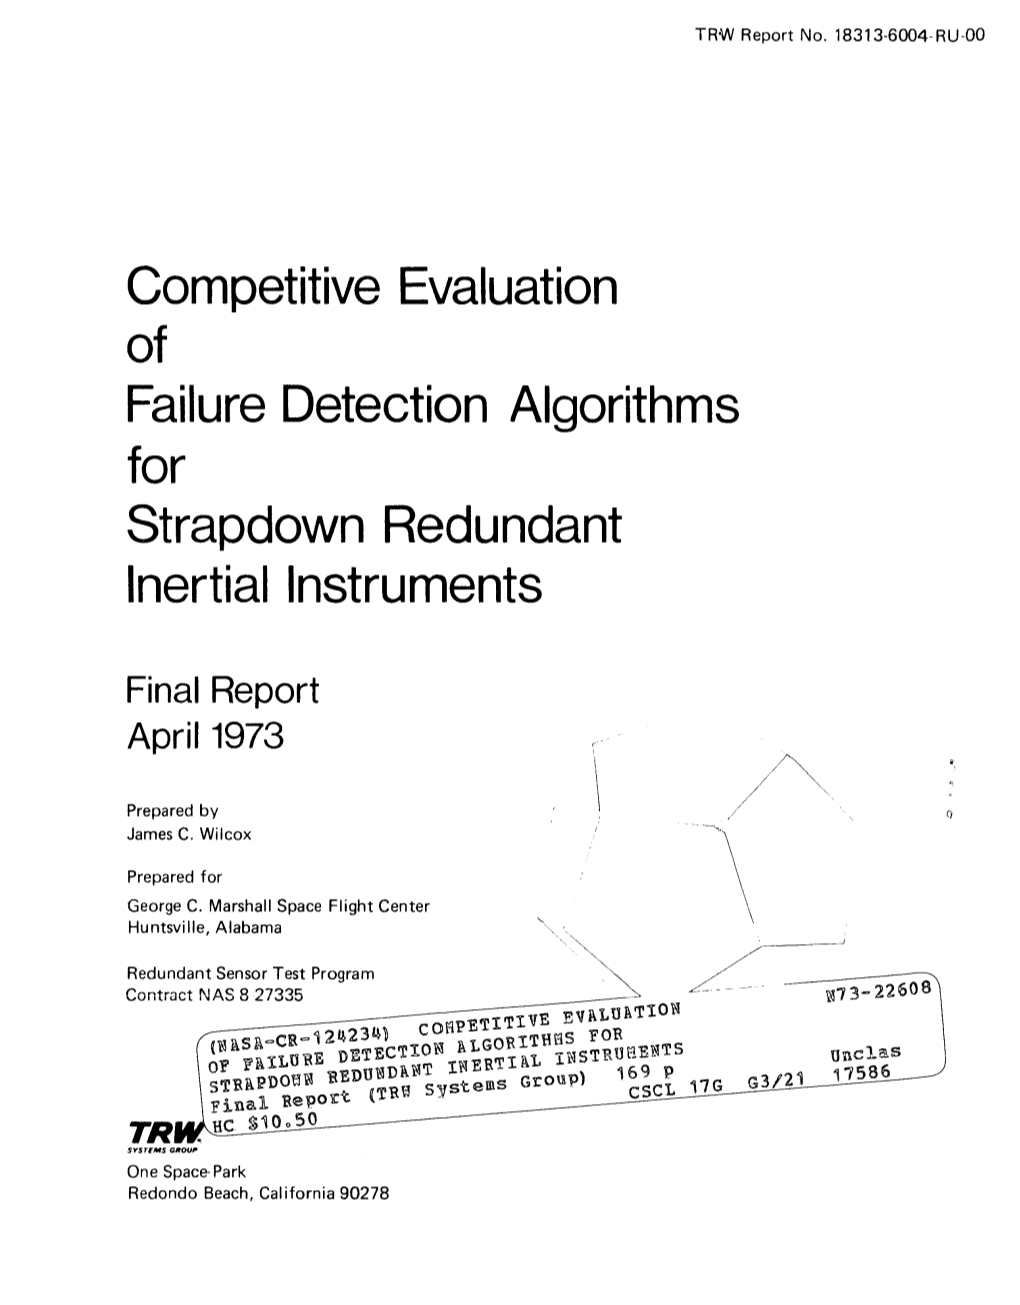 Competitive Evaluation of Failure Detection Algorithms for Strapdown Redundant Inertial Instruments